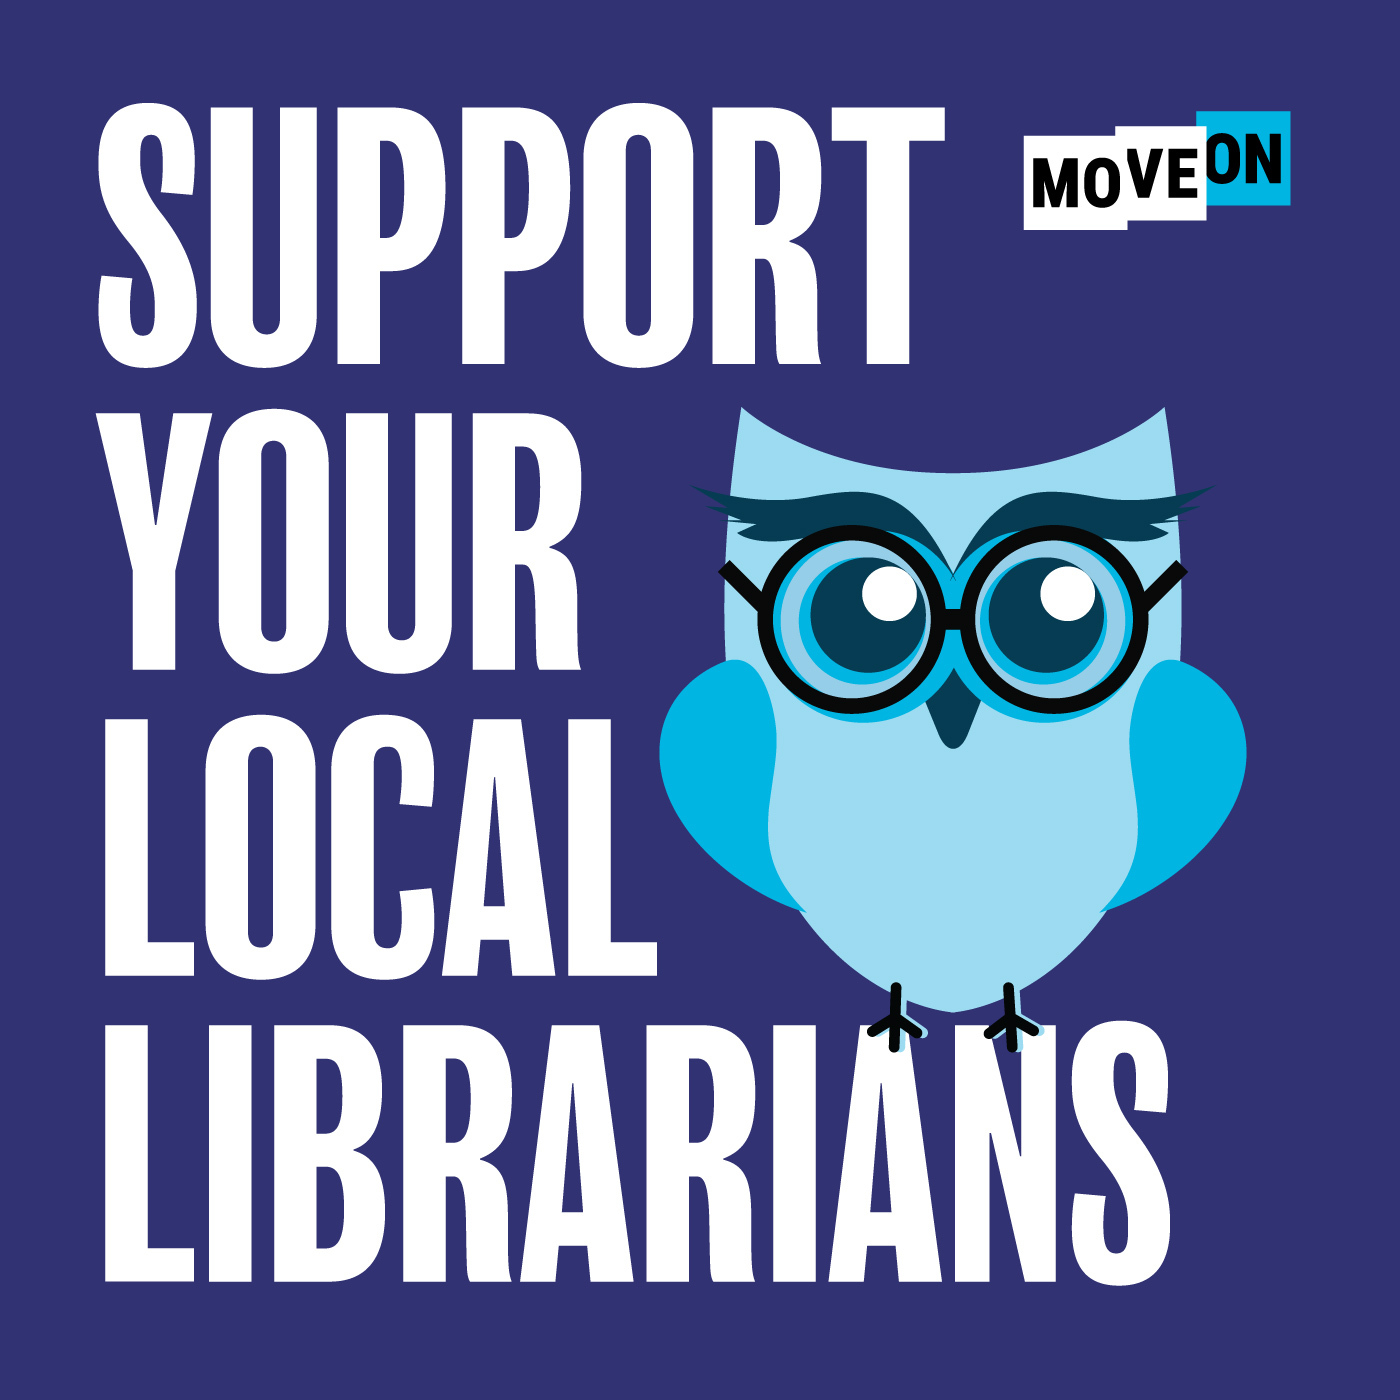 Local-Librarians-01